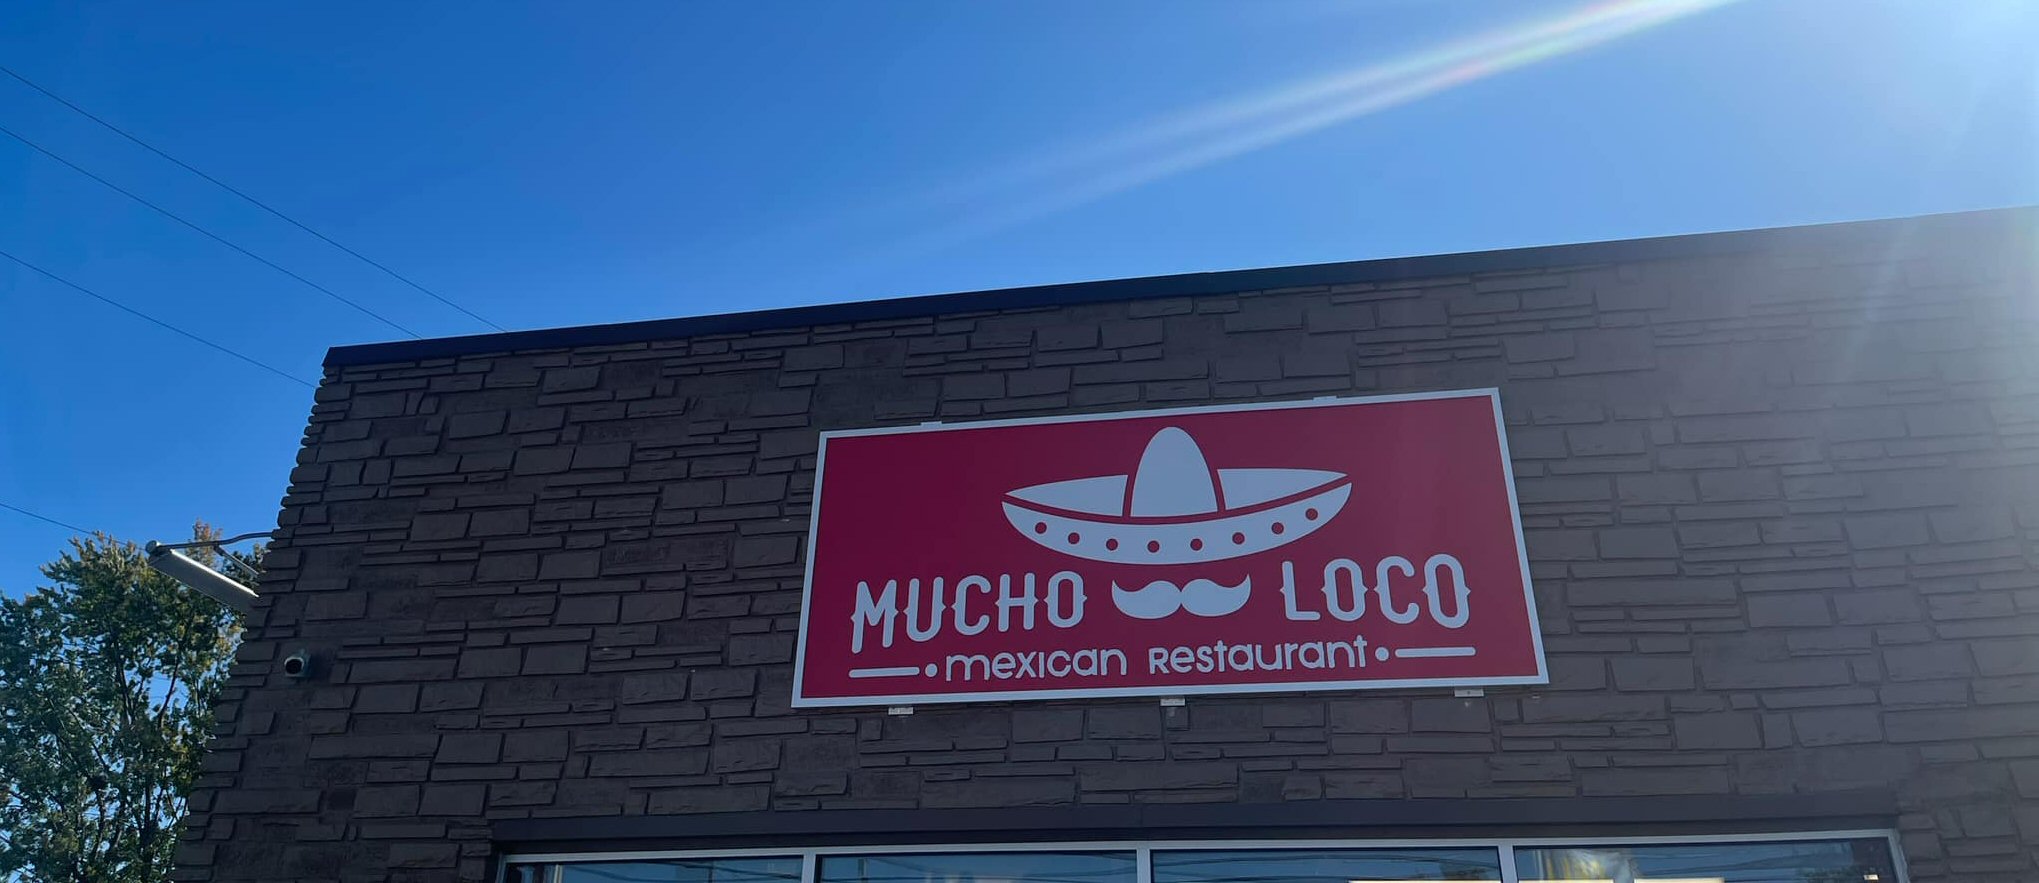 Mucho Loco Mexican Restaurant Now Open in Pennsville